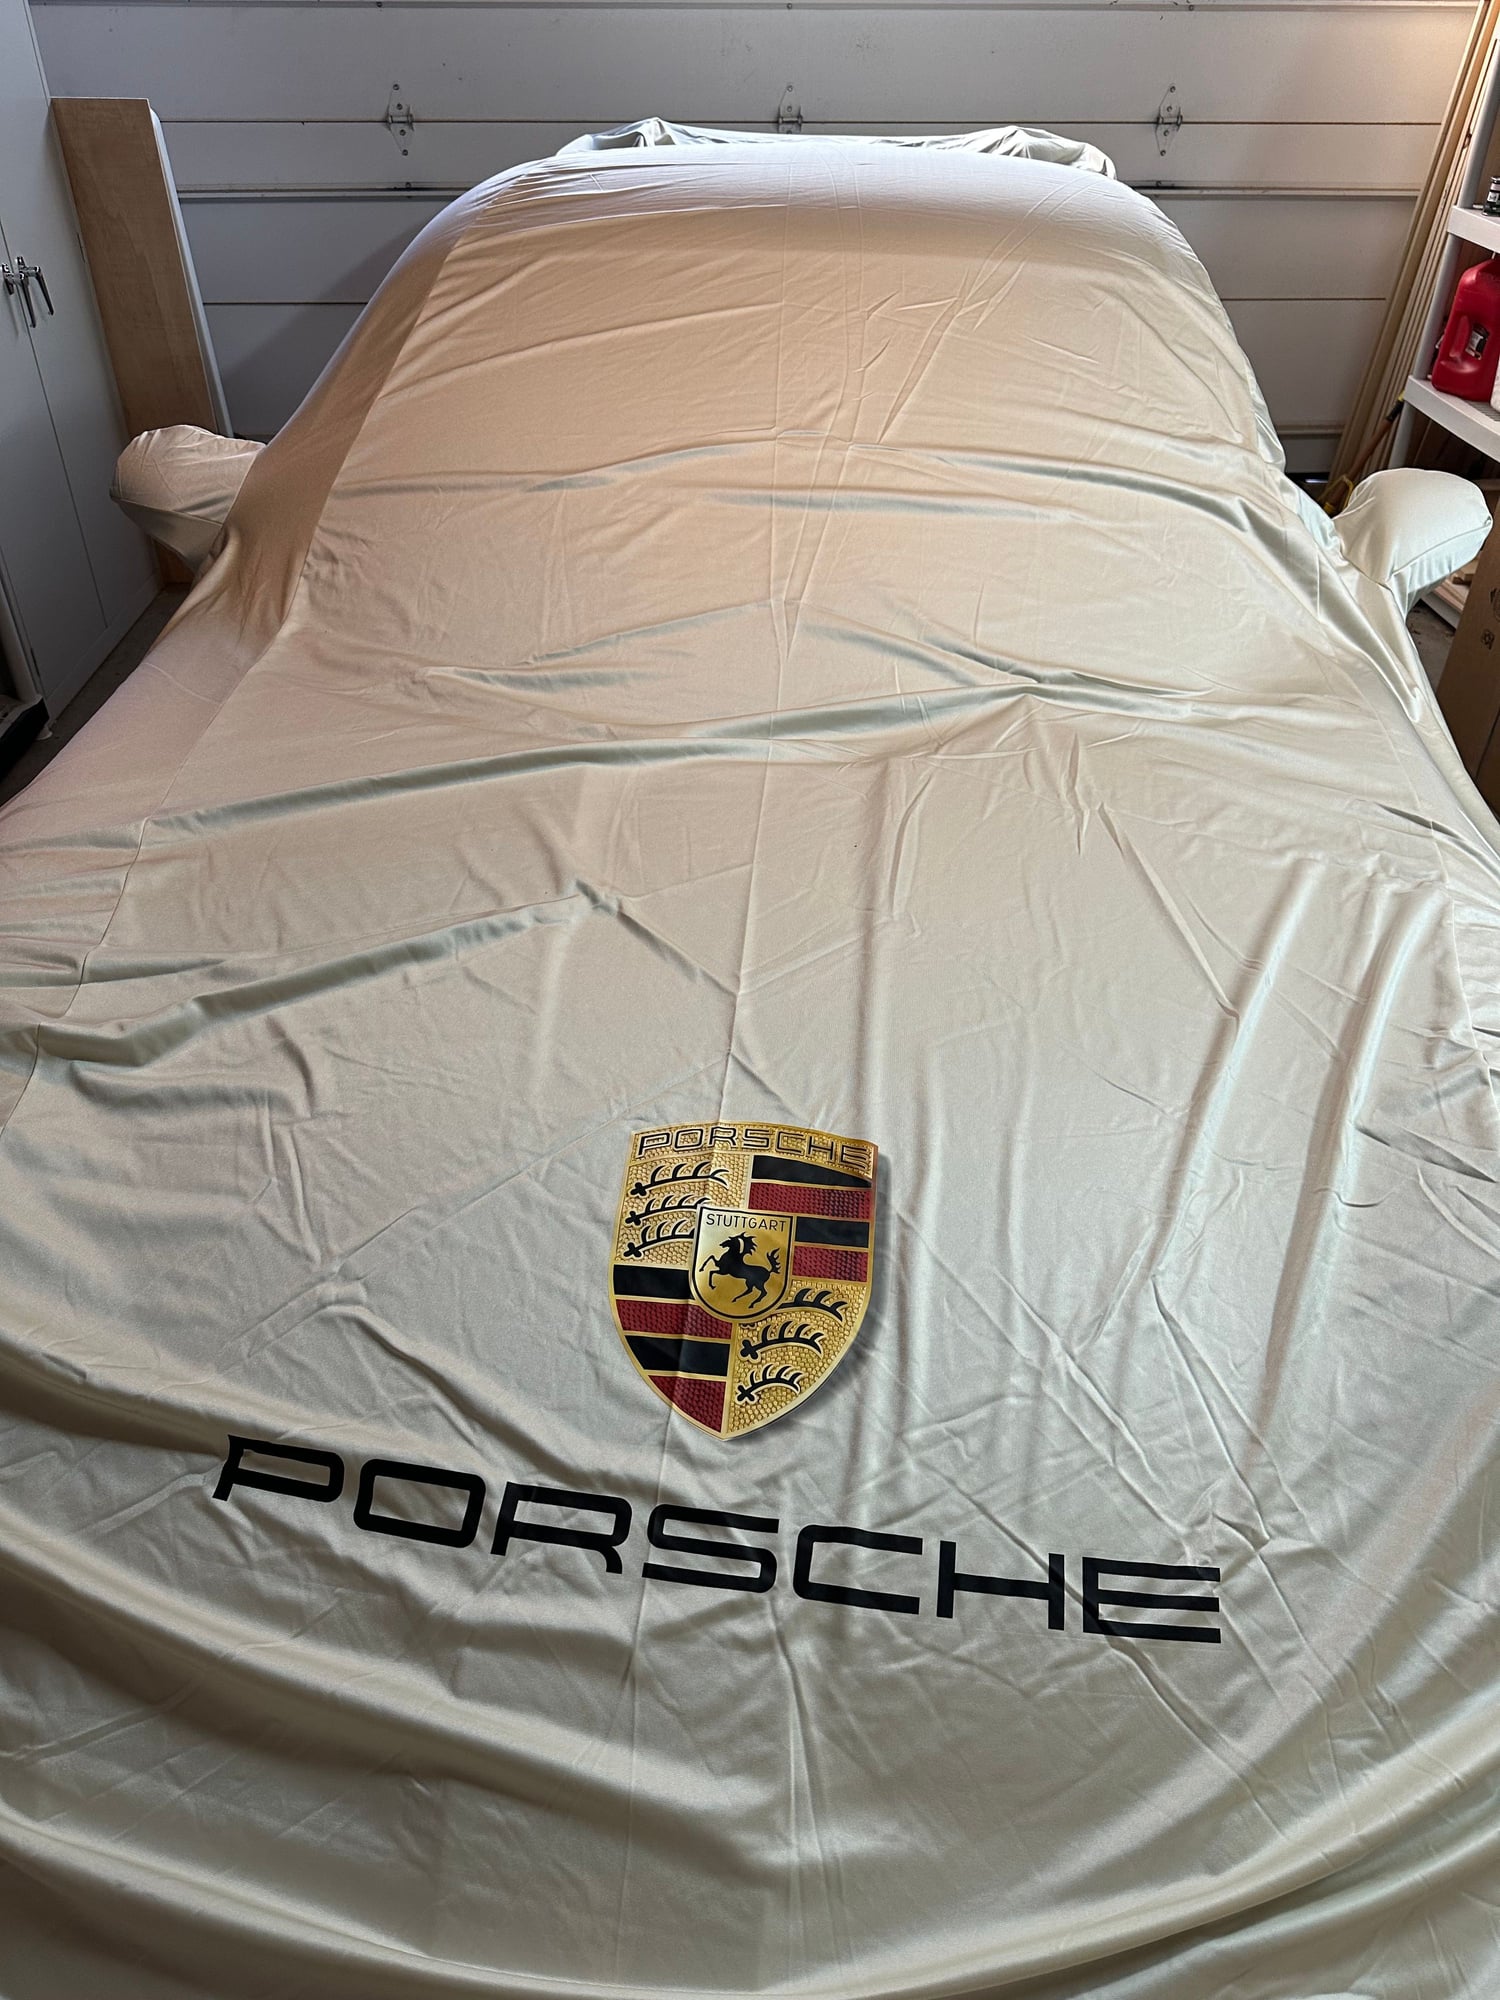 2022 Porsche 911 - 992 GT3, PTS, CPO Til 2029, Buckets, PDK - Used - VIN Xxxxxxxxxxxxxxxx - 9,954 Miles - Automatic - Coupe - Los Angeles, CA 91436, United States